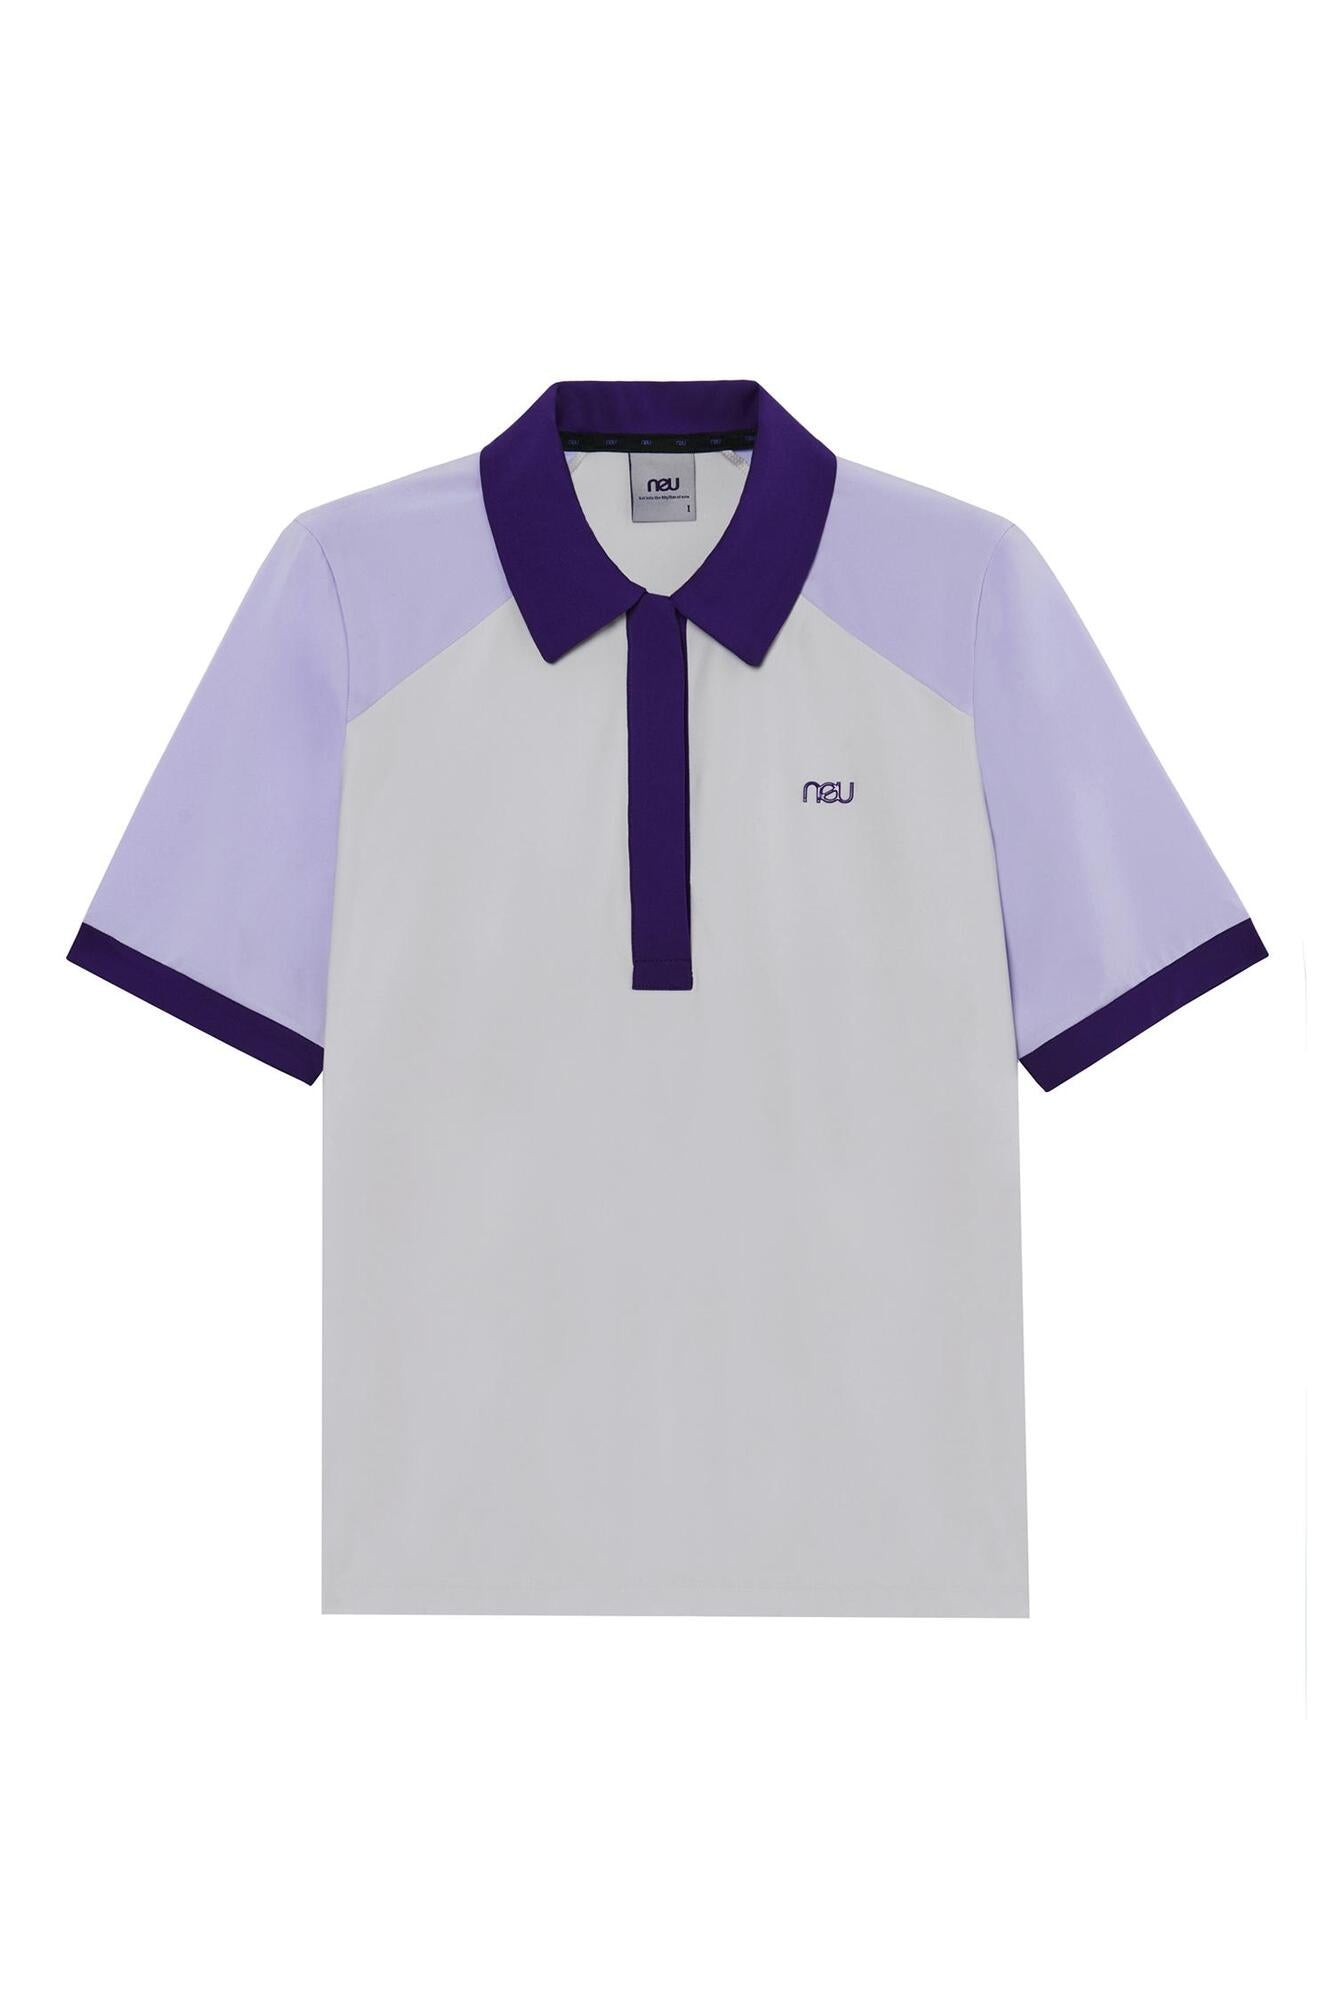 NEU Golf Raglan Setup T-Shirt Purple